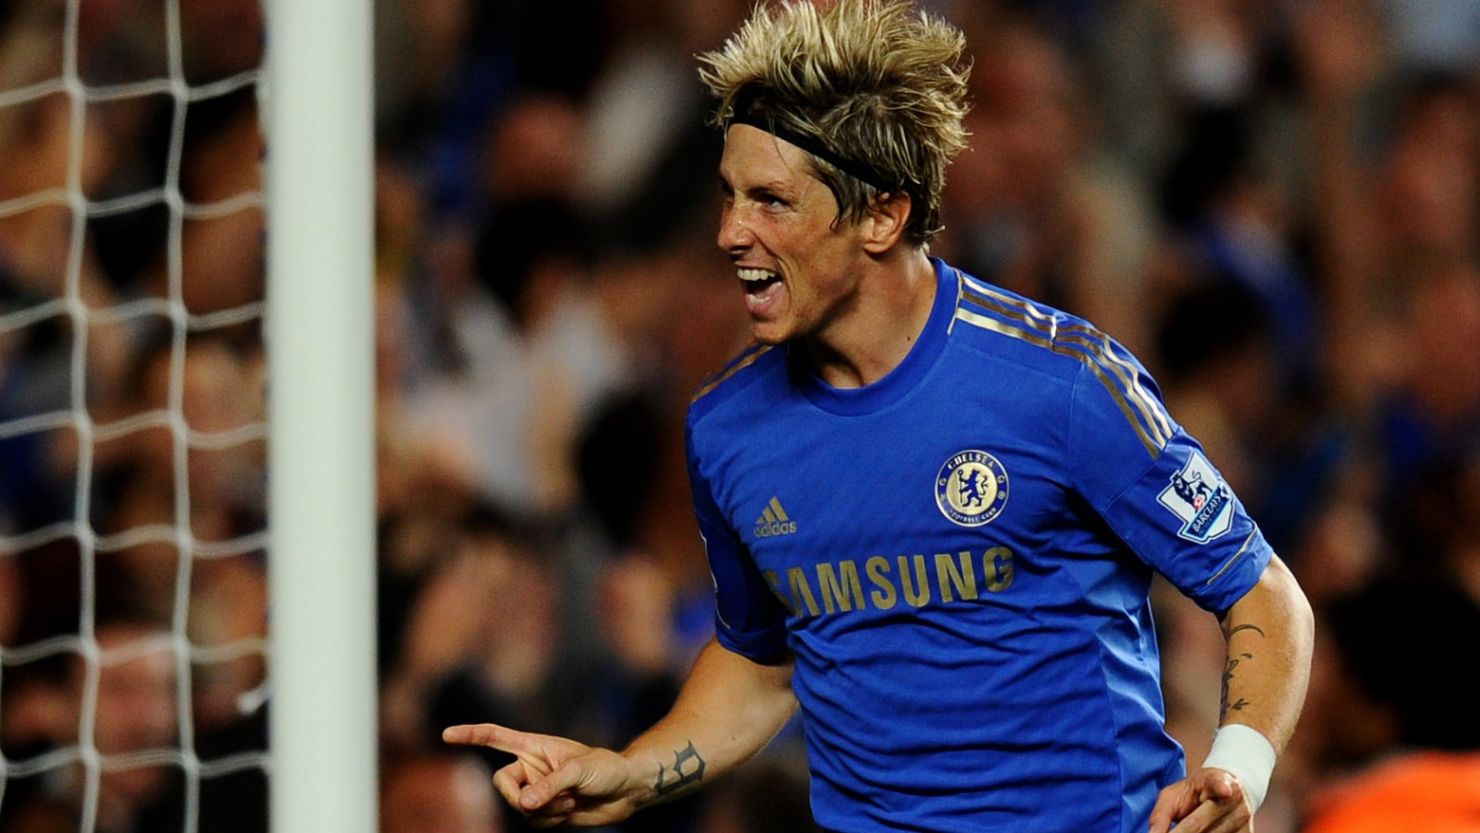 Fernando Torres celebrates scoring Chelsea's decisive third goal at Stamford Bridge in the 4-2 win over Reading.